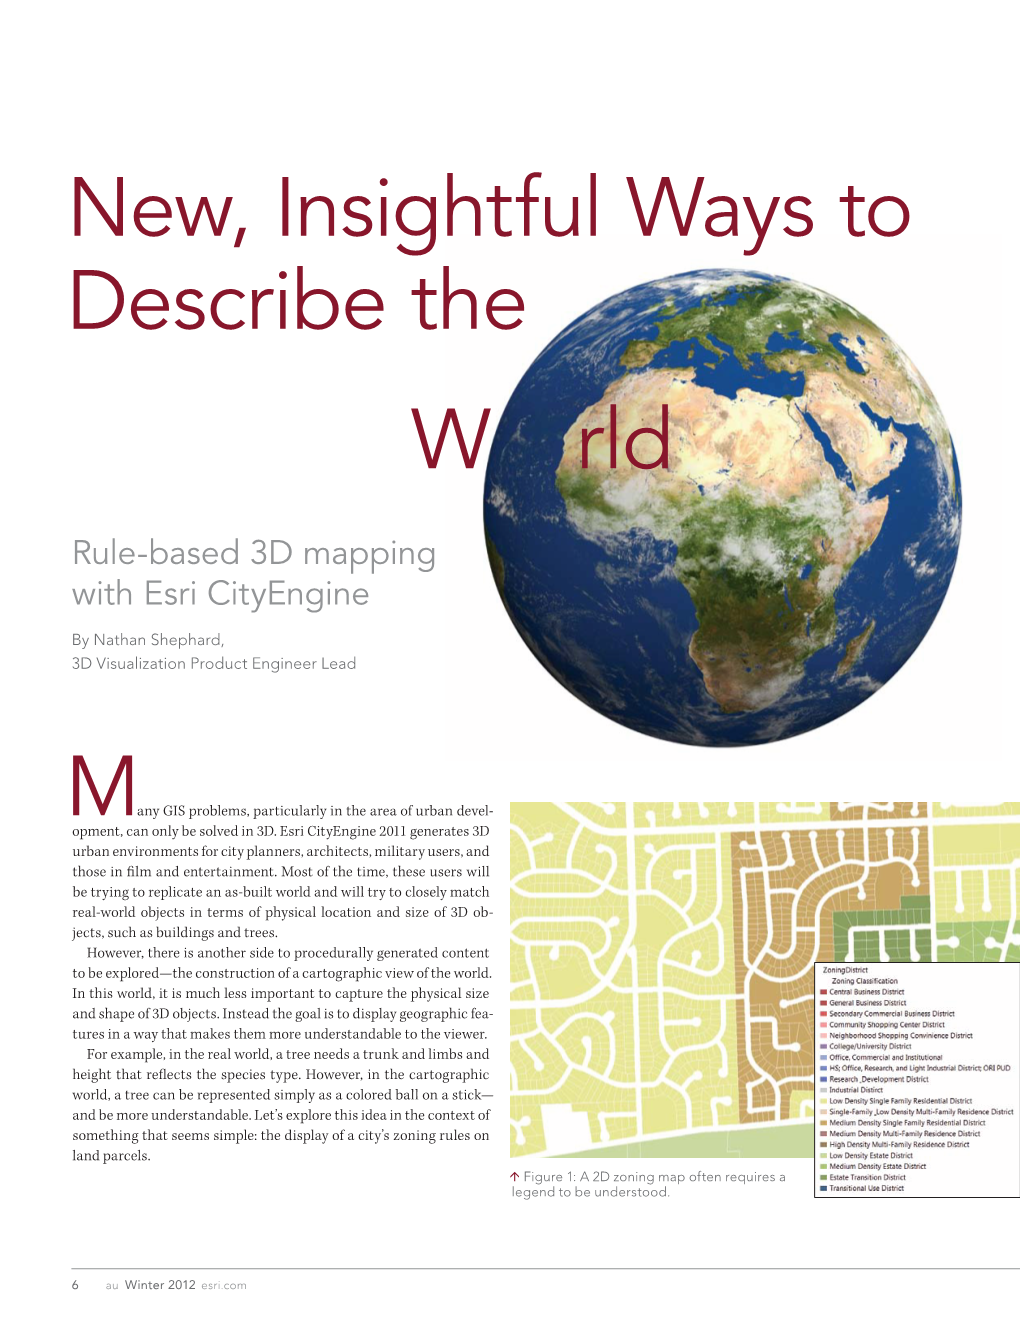 New, Insightful Ways to Describe the World